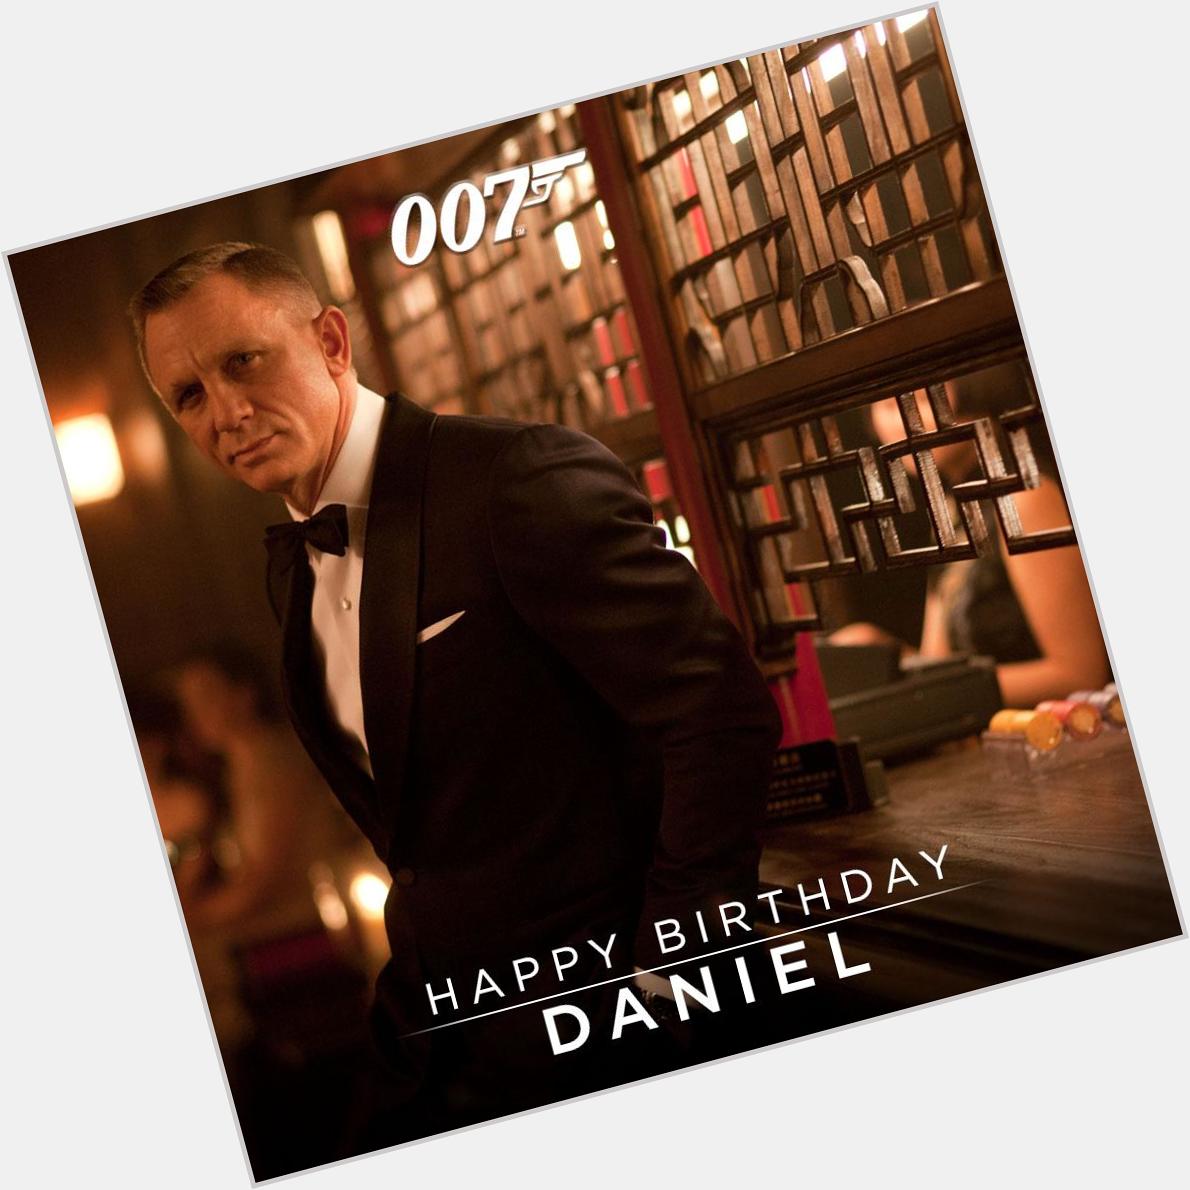 Happy birthday to our very own James Bond Daniel Craig! 